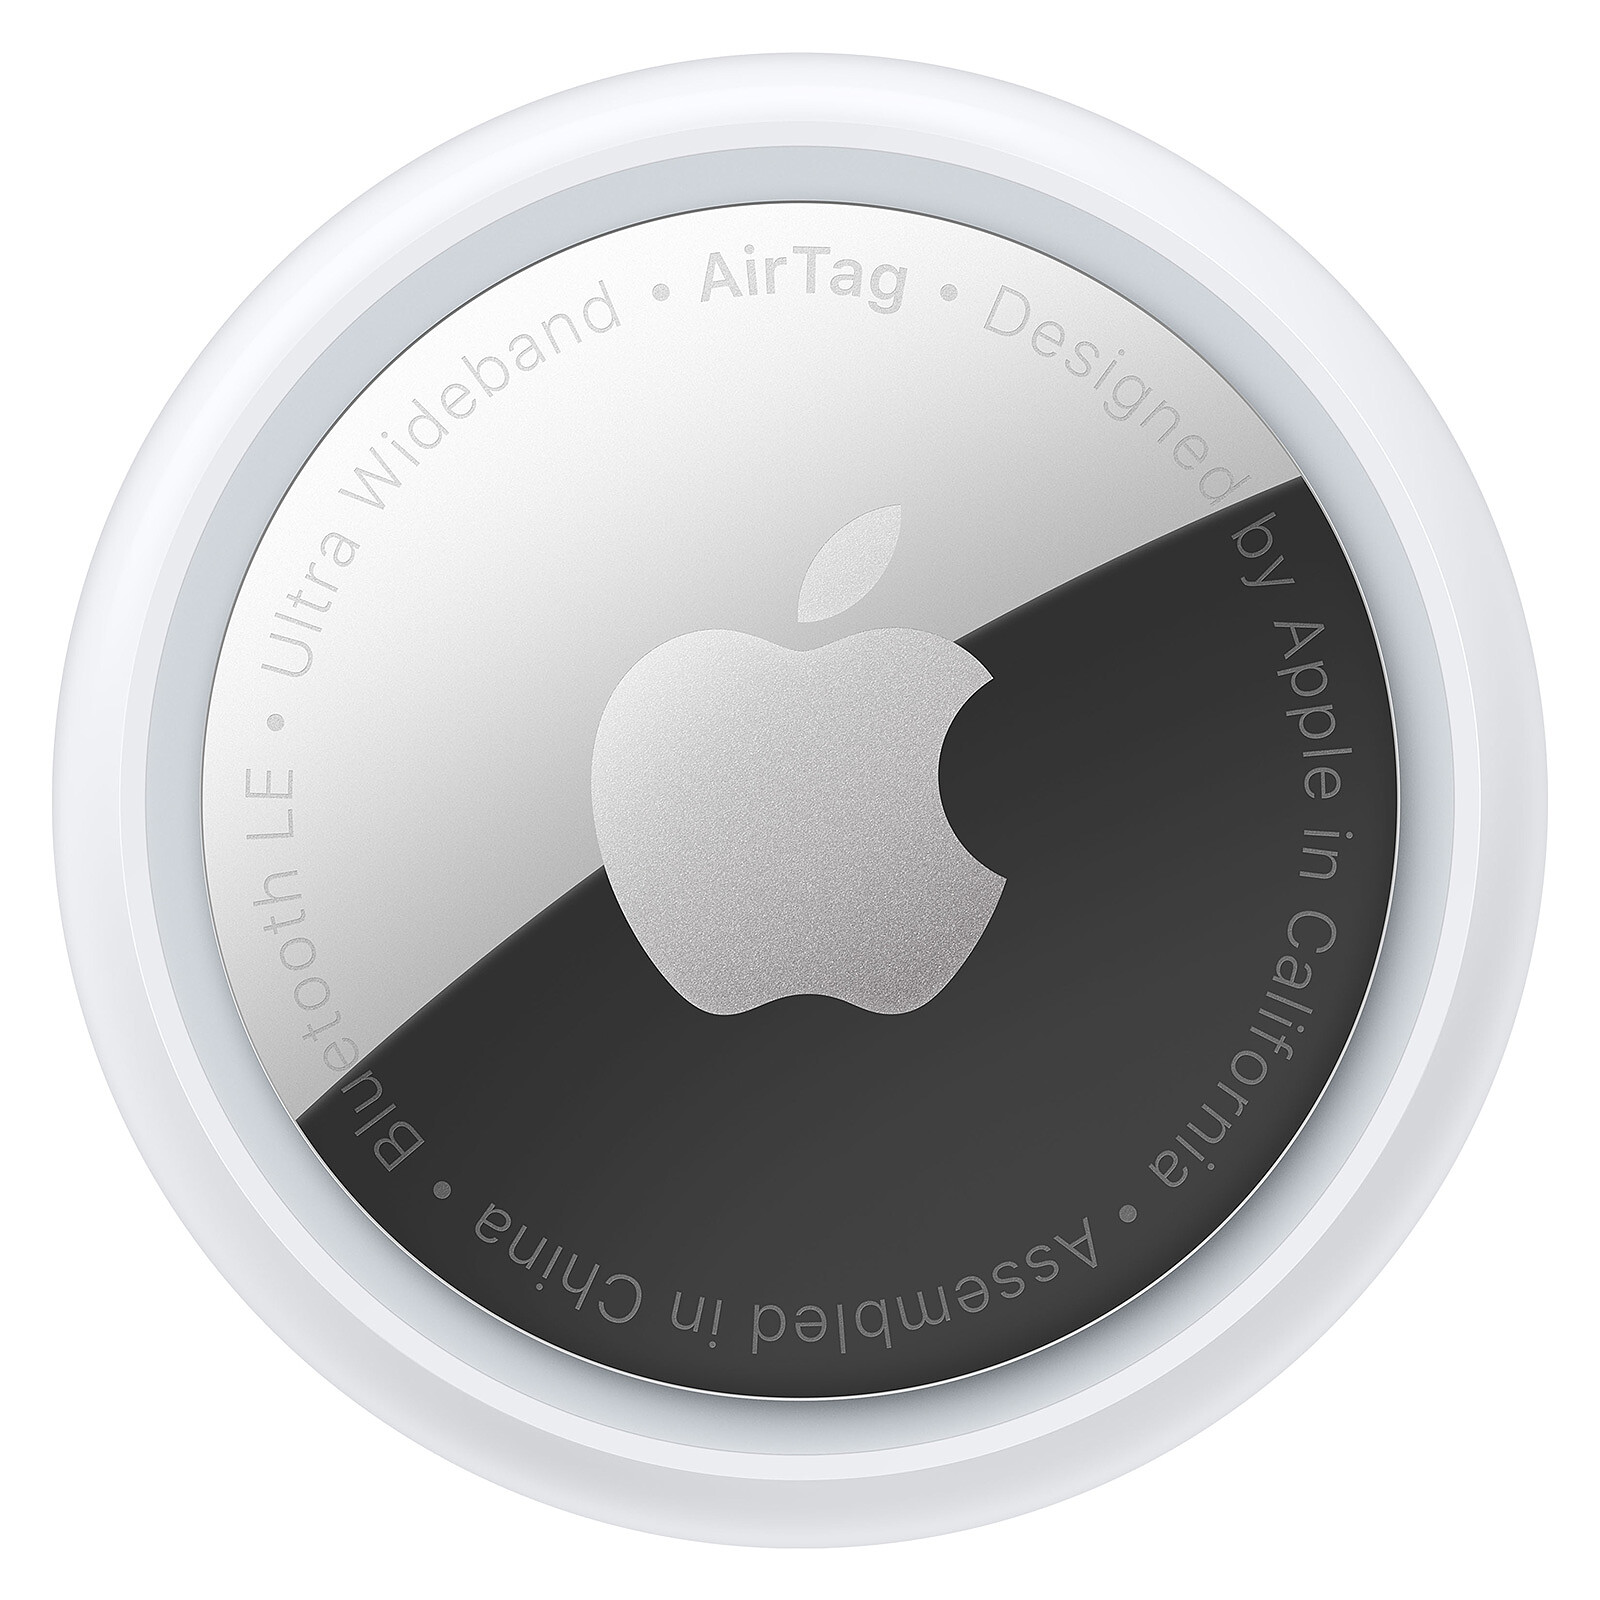 pour Airtag Apple Air tag Apple Porte cle airtag - Perte Localisateur  Tracker Housse Étui Anti-Rayures Portable pour Apple AirTag Housse Porte